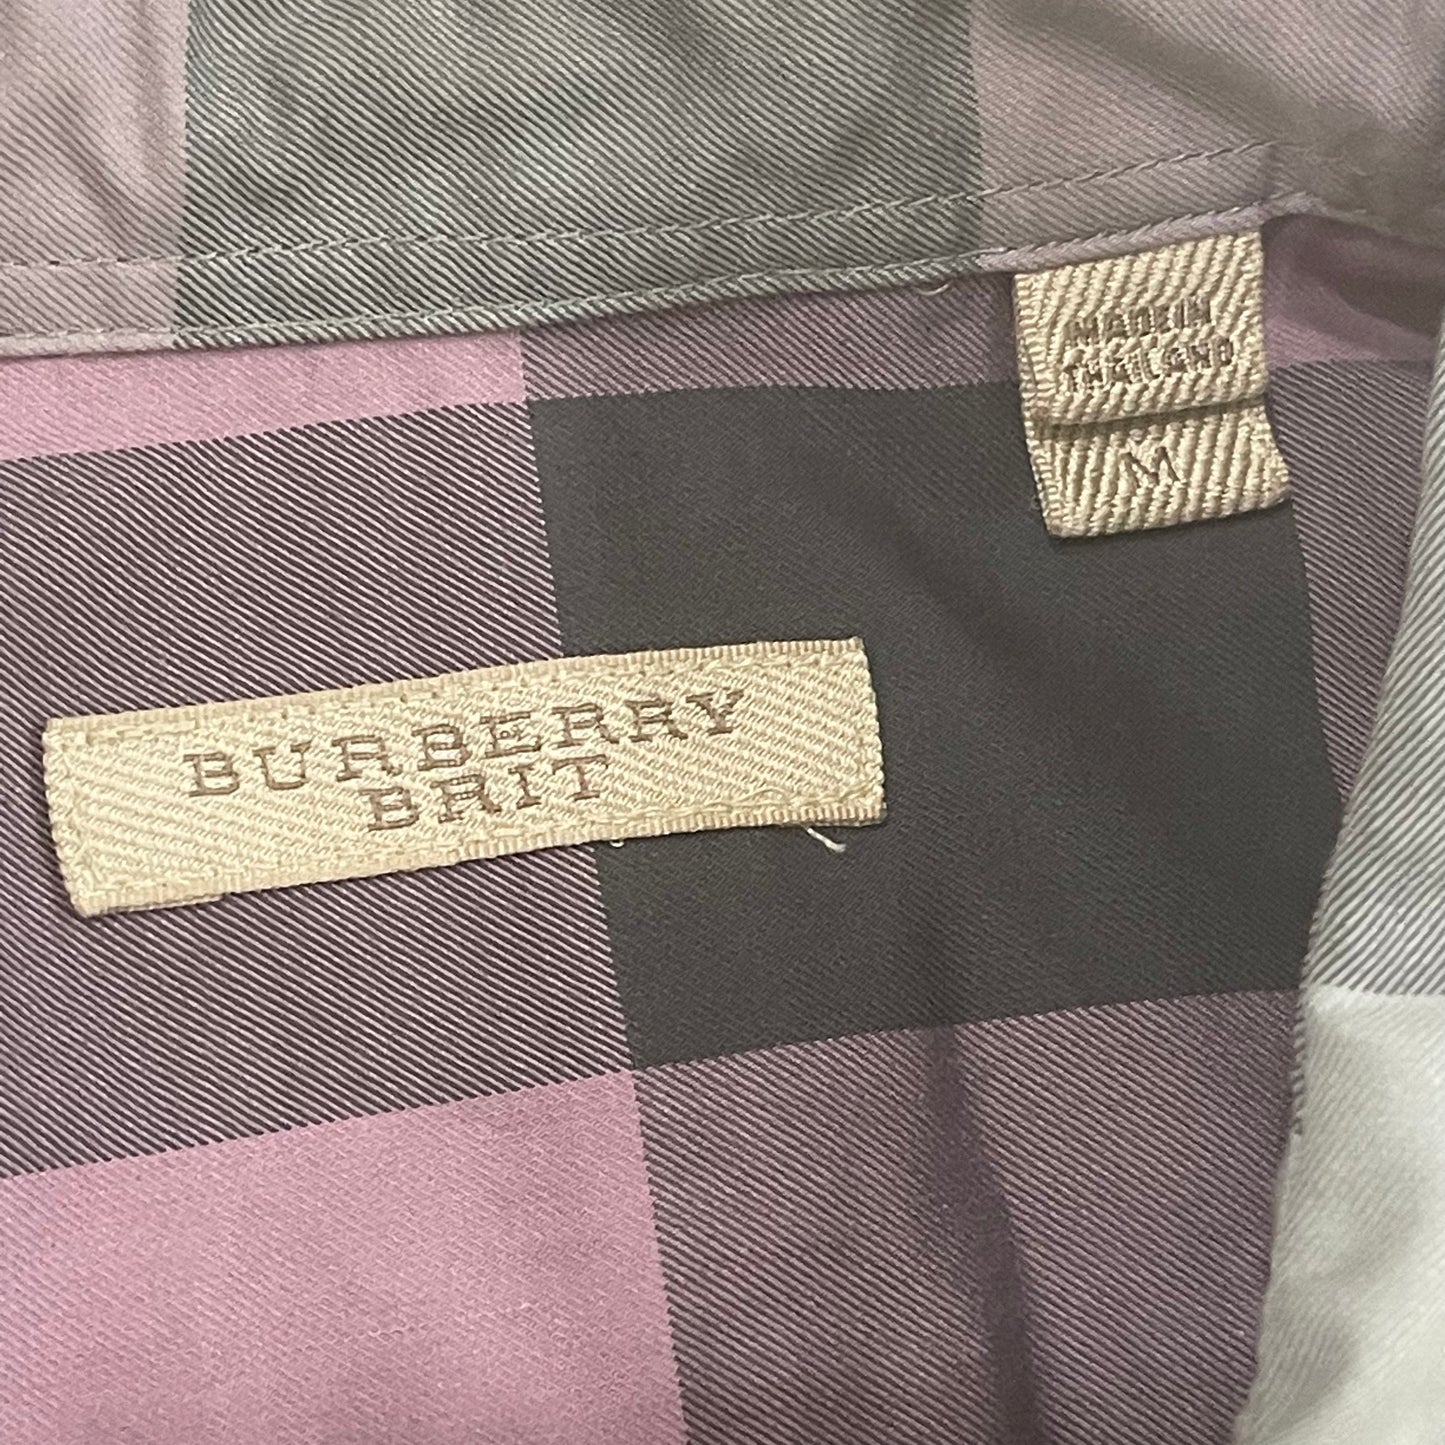 Burberry Long Sleeve Check Grey Lavender Shirt Size Medium